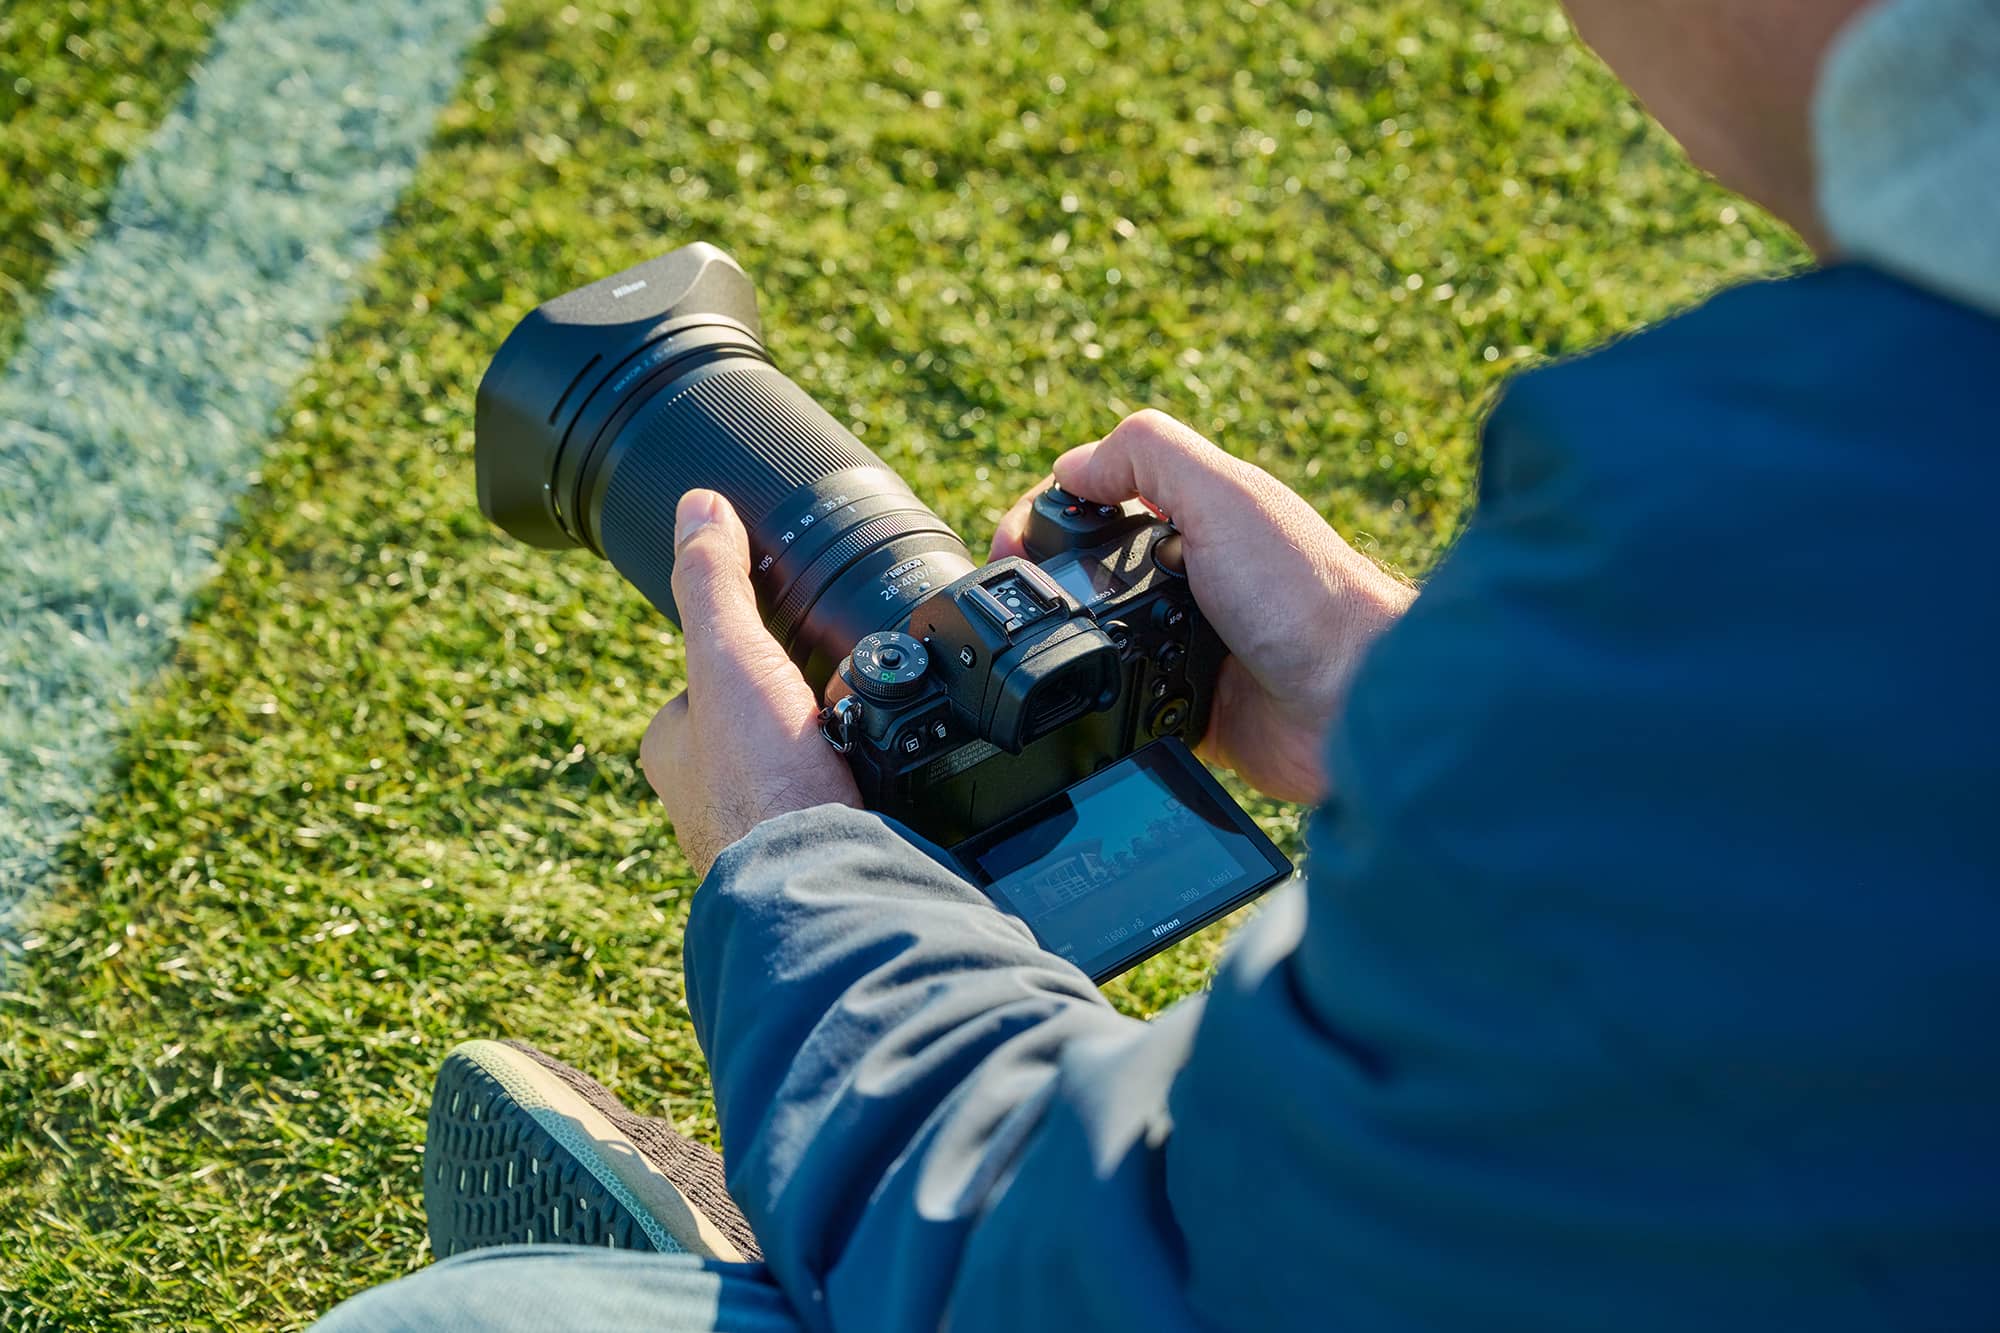 Nikon Nikkor Z 28-400mm f/4-8 VR objektiiv